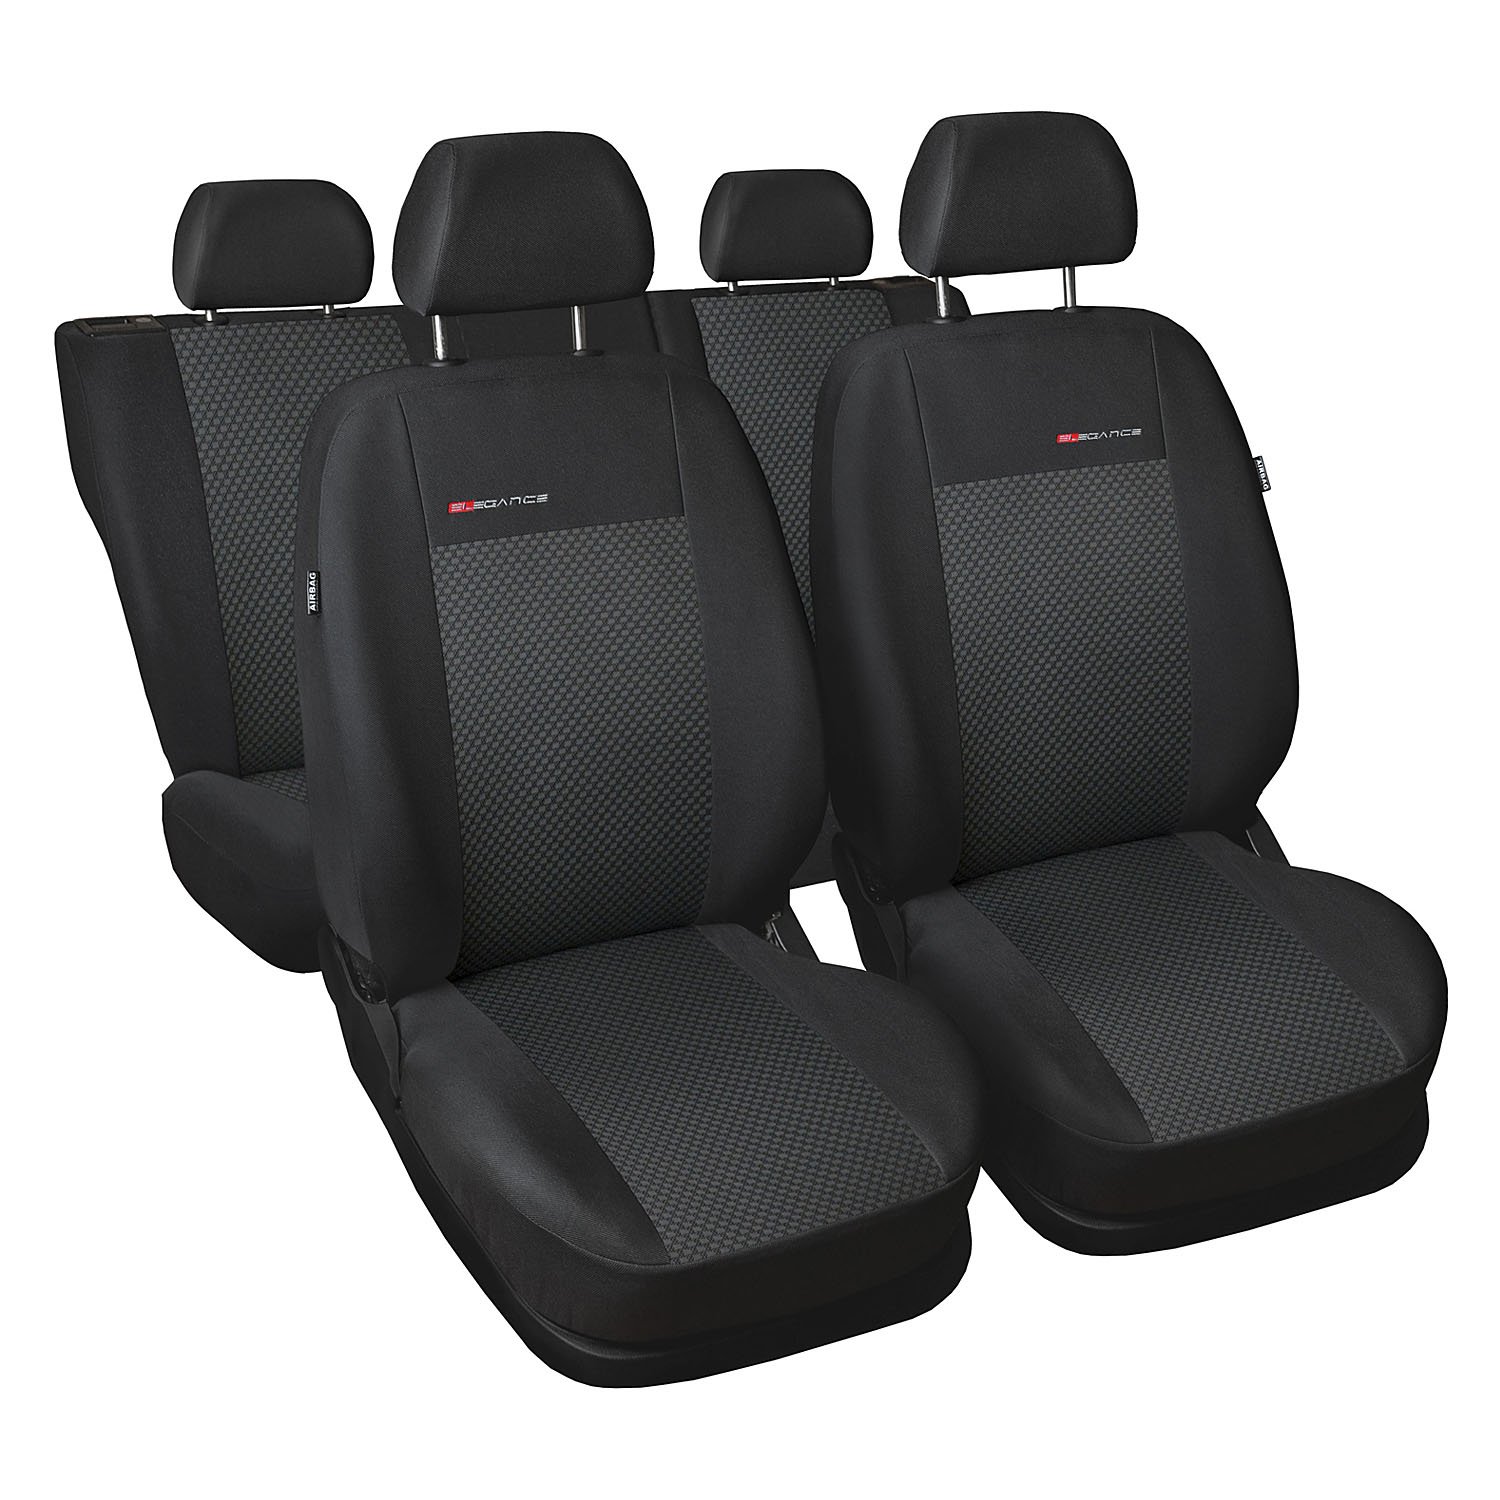 speedszop Universal Sitzbezug Sitzbezüge Schonbezüge kompatibel mit OPEL Mokka von speedszop